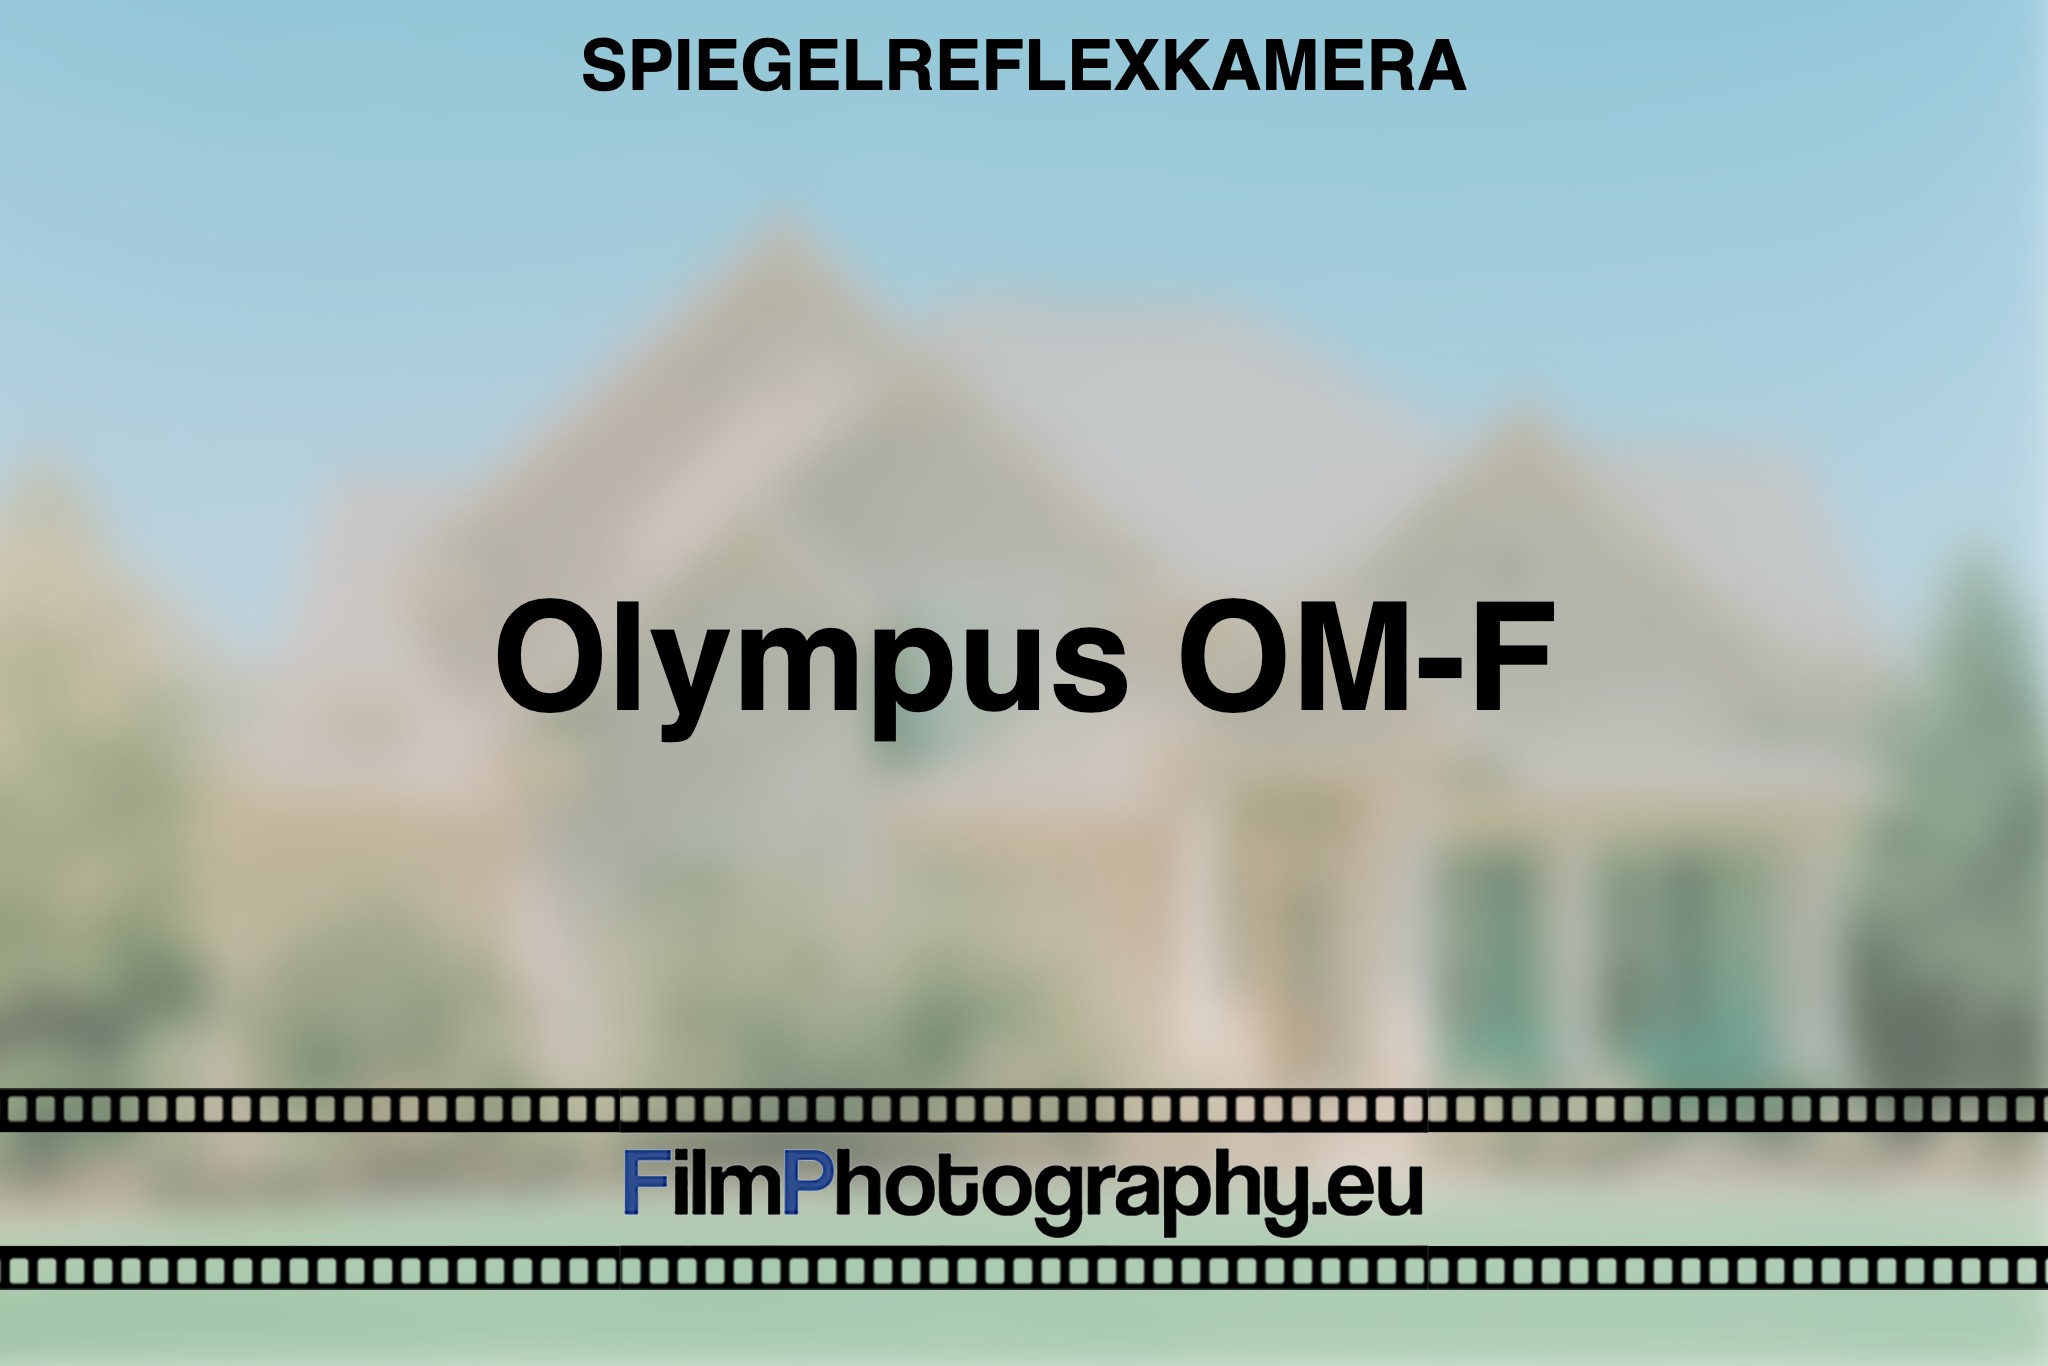 olympus-om-f-spiegelreflexkamera-bnv